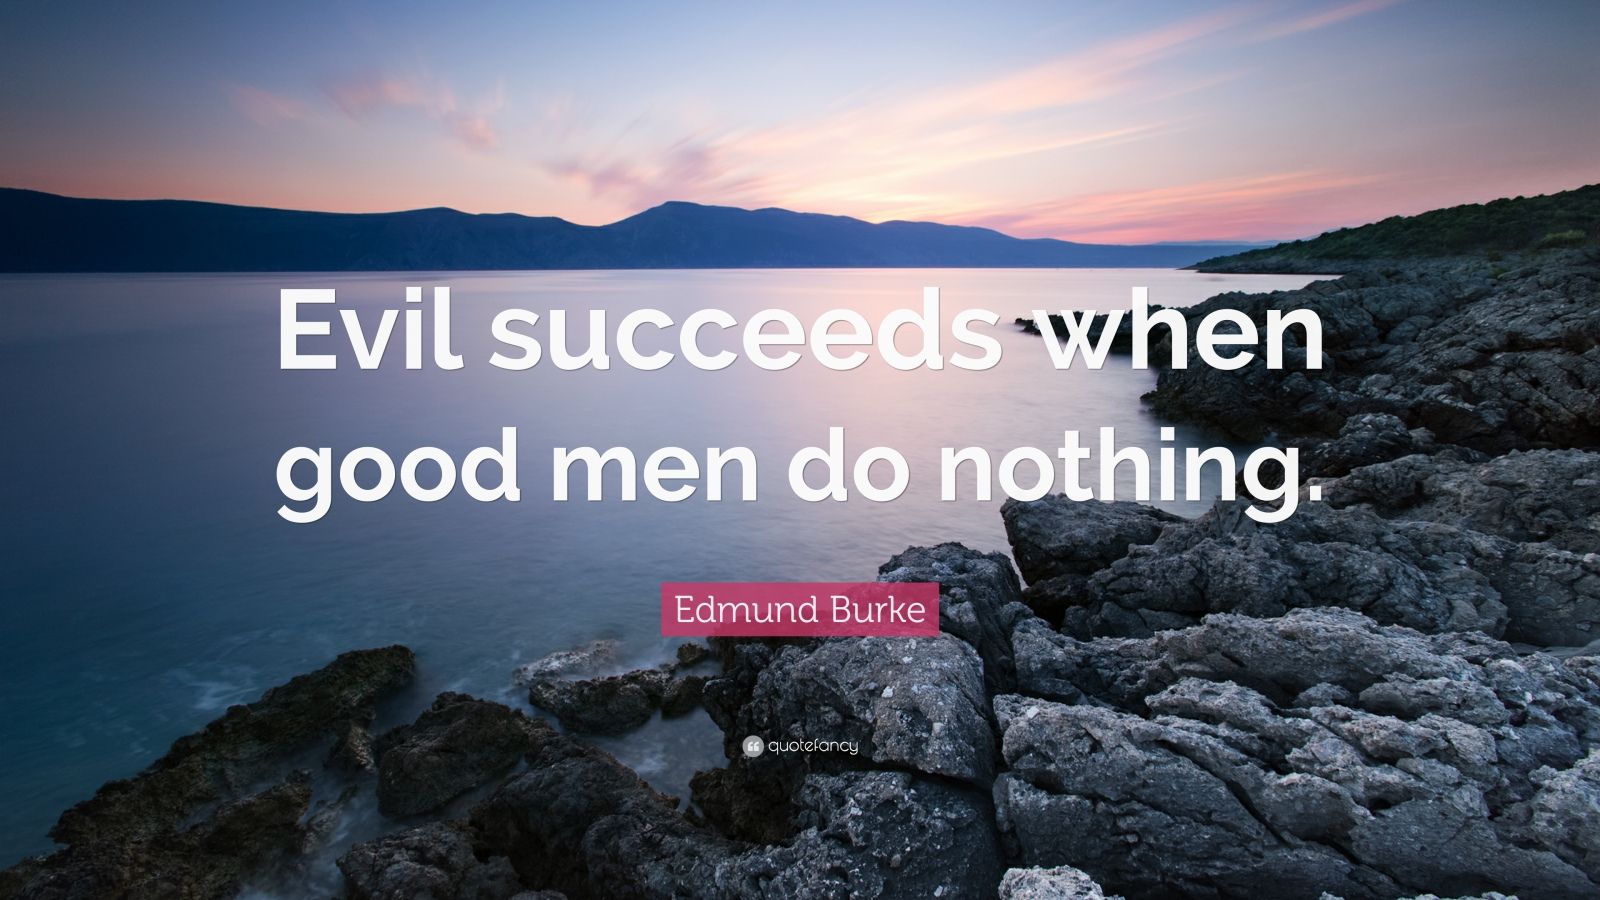 Edmund Burke Quote: “Evil succeeds when good men do nothing.” (12